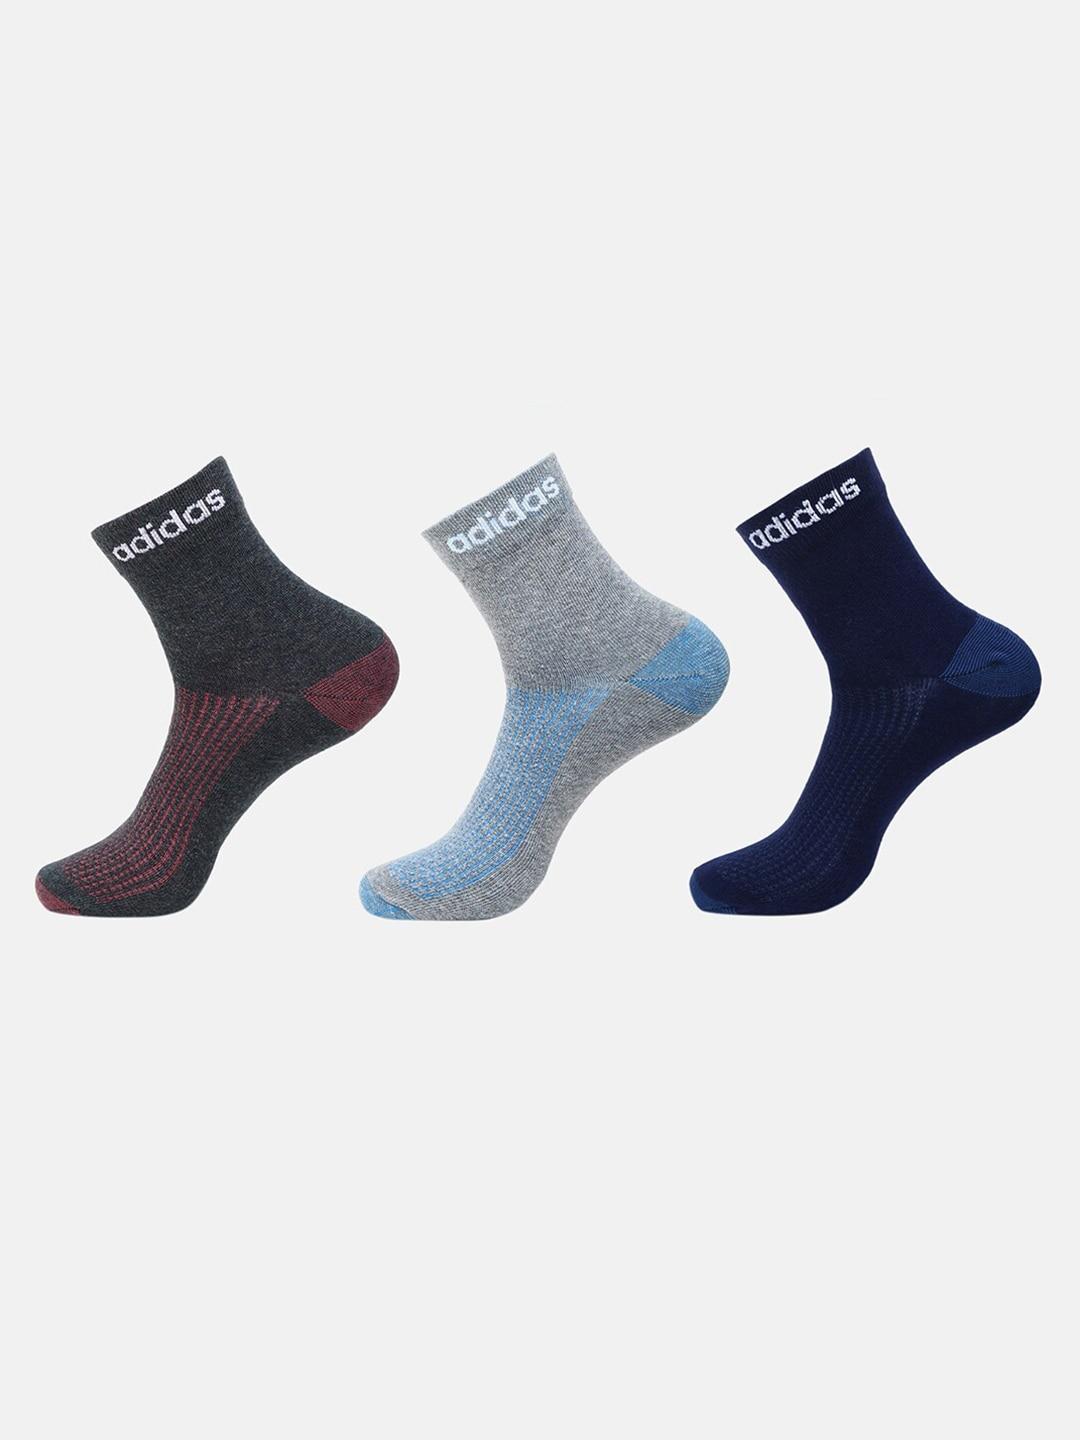 adidas-men-pack-of-3-flat-knit-ankle-socks